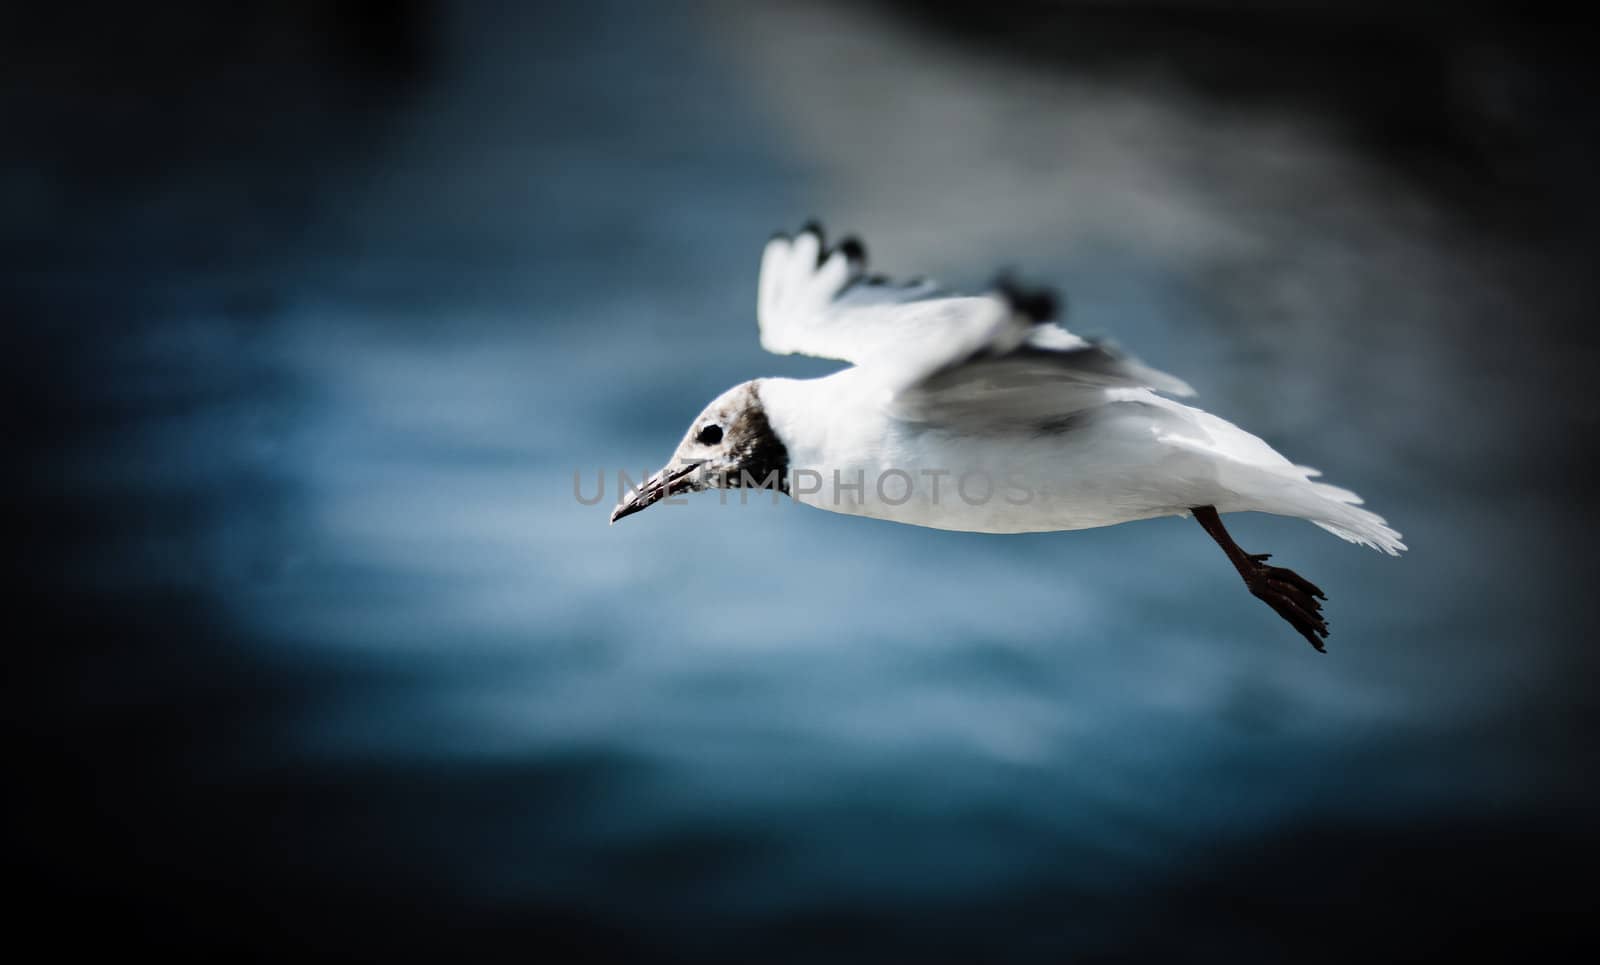 Flying bird by anobis